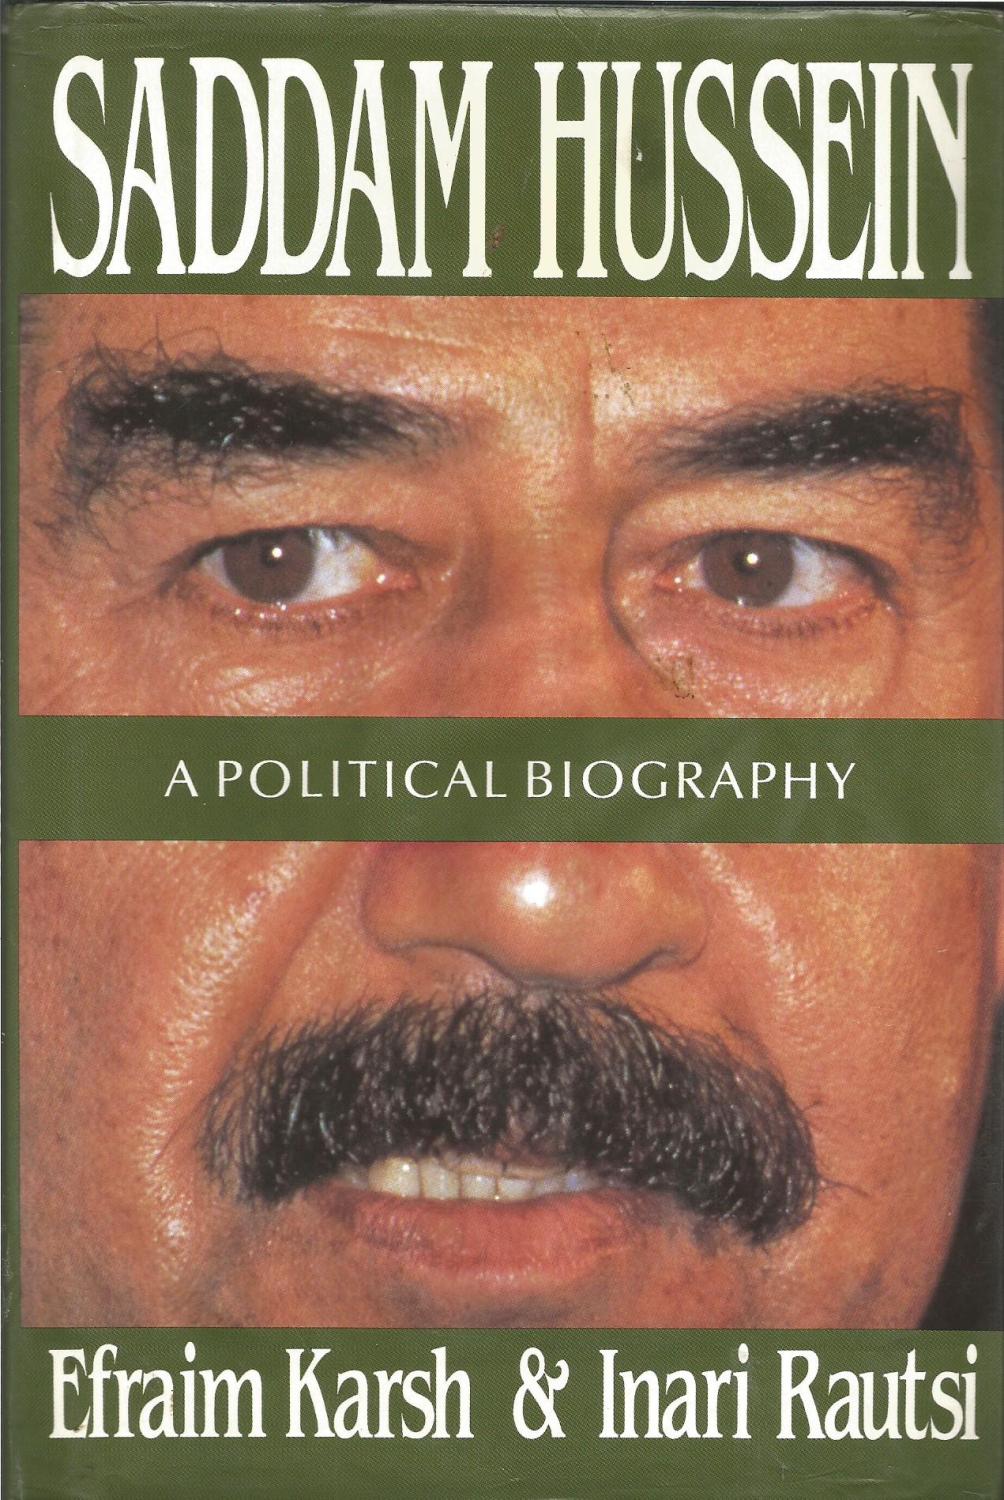 books on saddam hussein biography